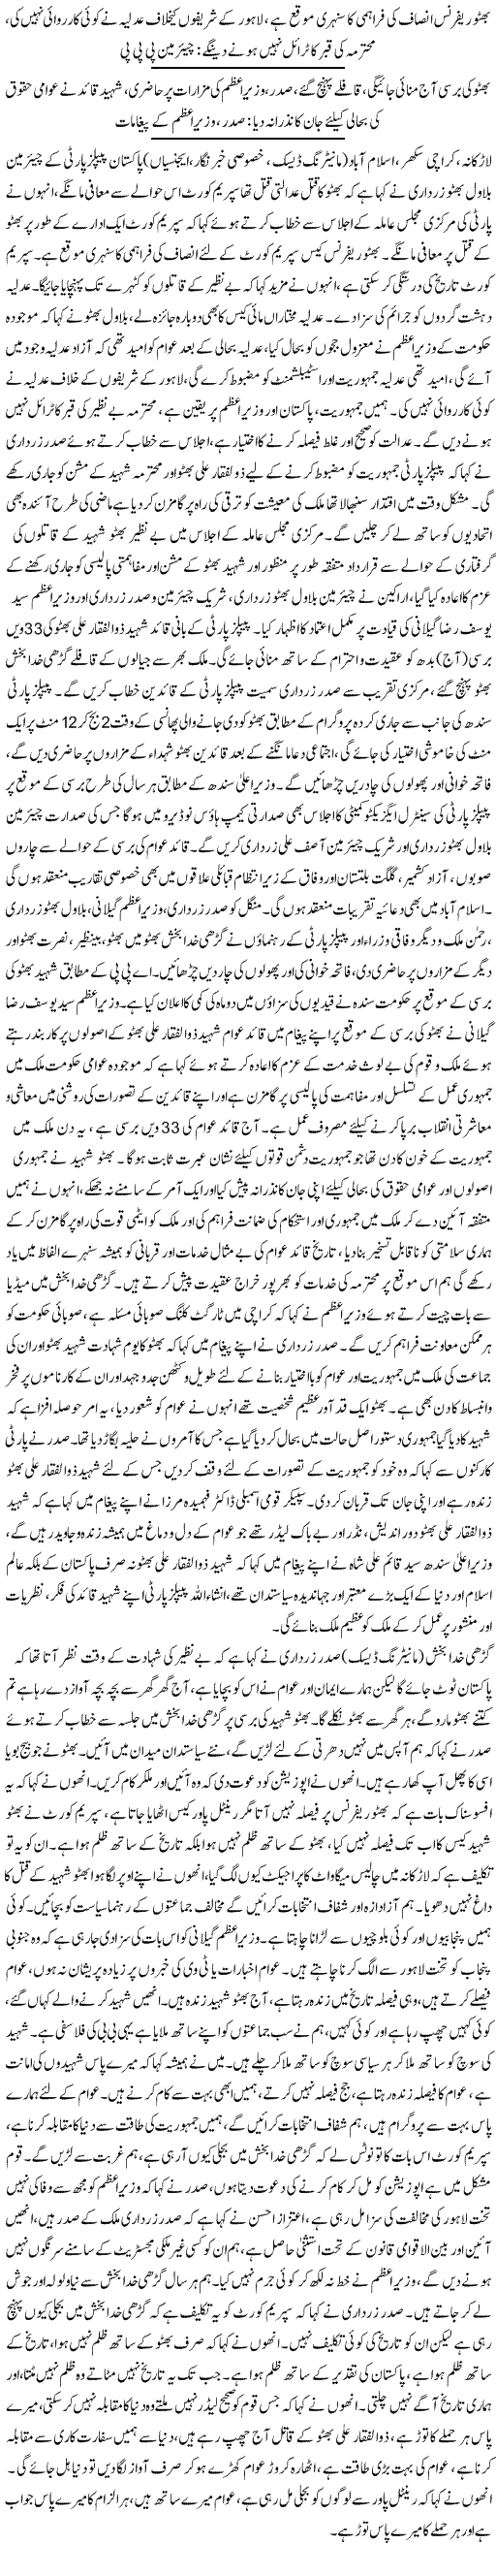 Zardari and Bilawal Targets Supreme Court - News In Urdu